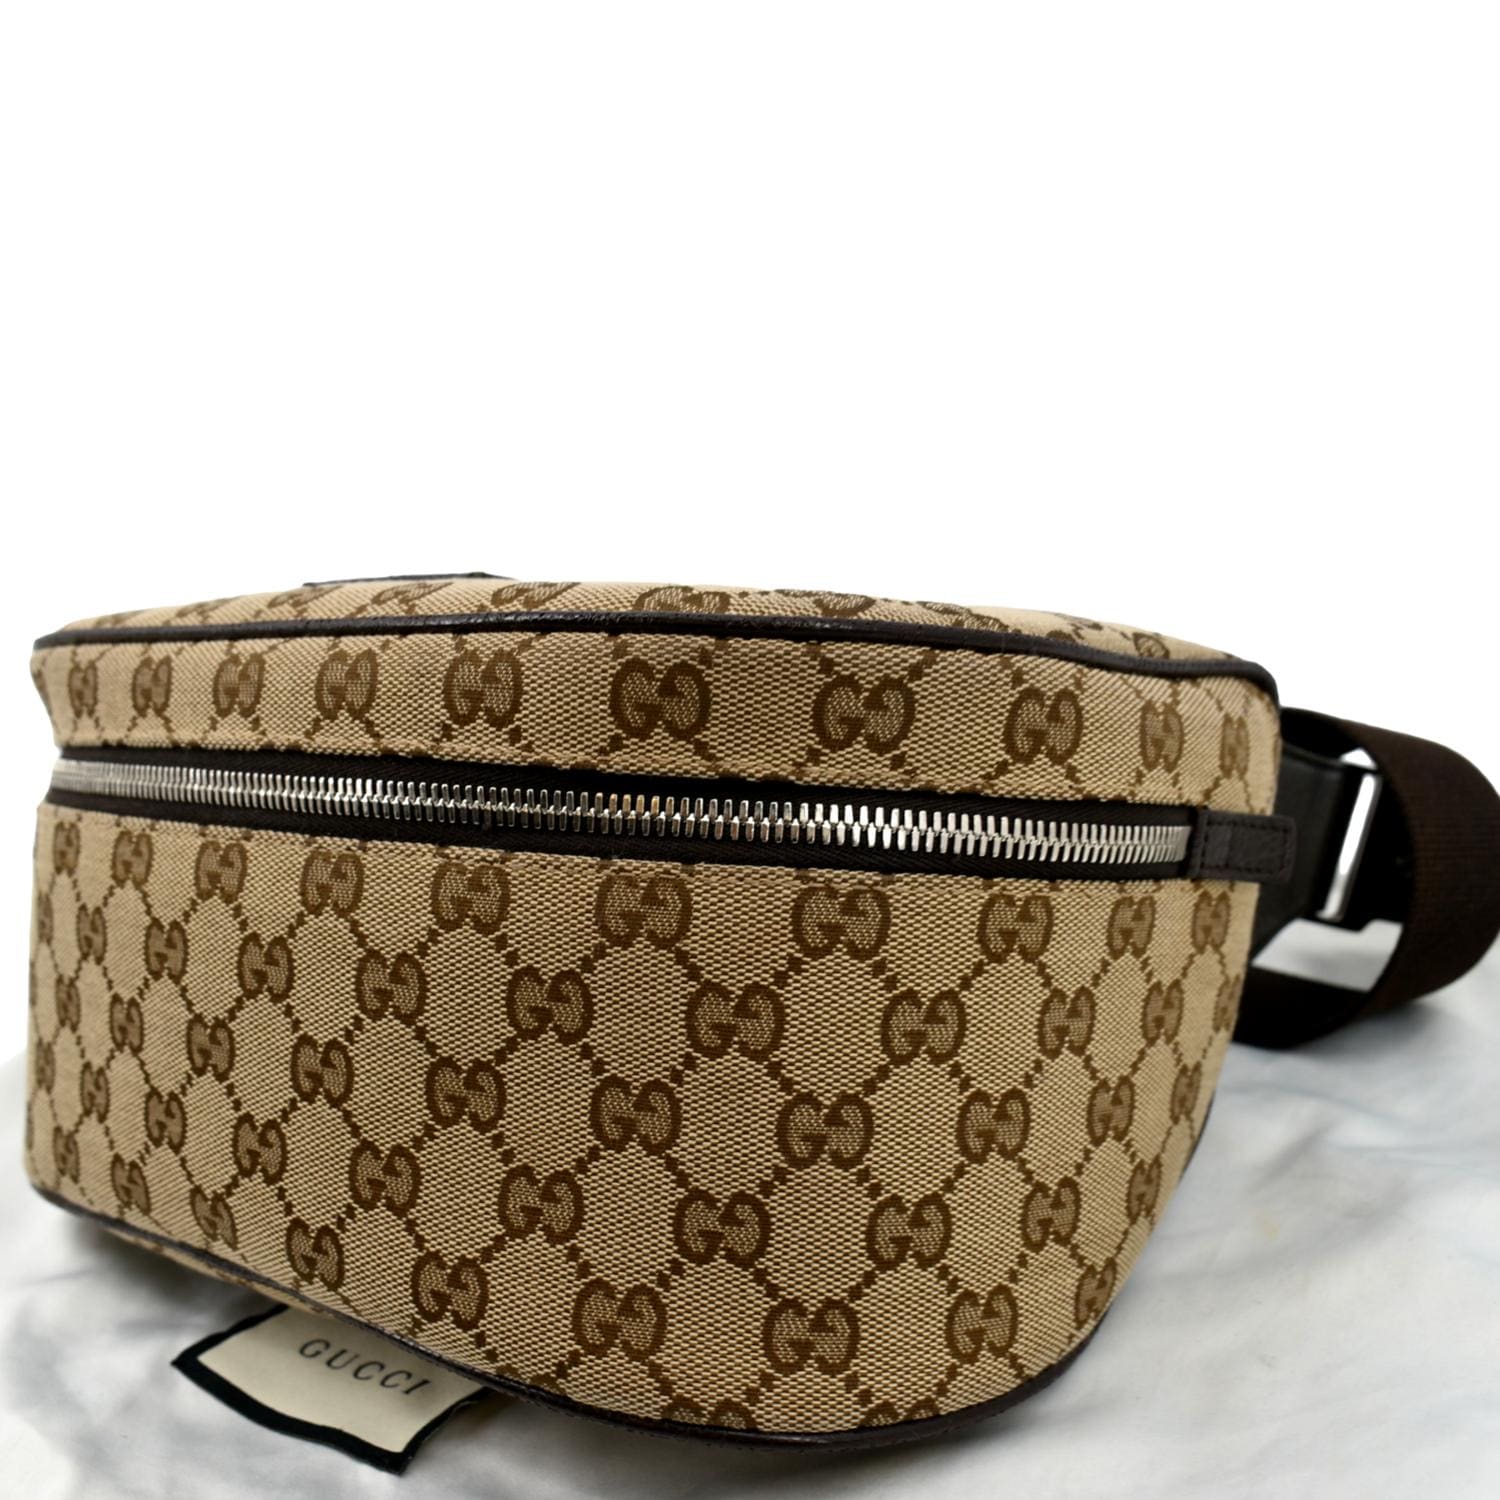 Gucci Black Monogram GG Belt Bag Fanny Pack Waist Pouch 8621009